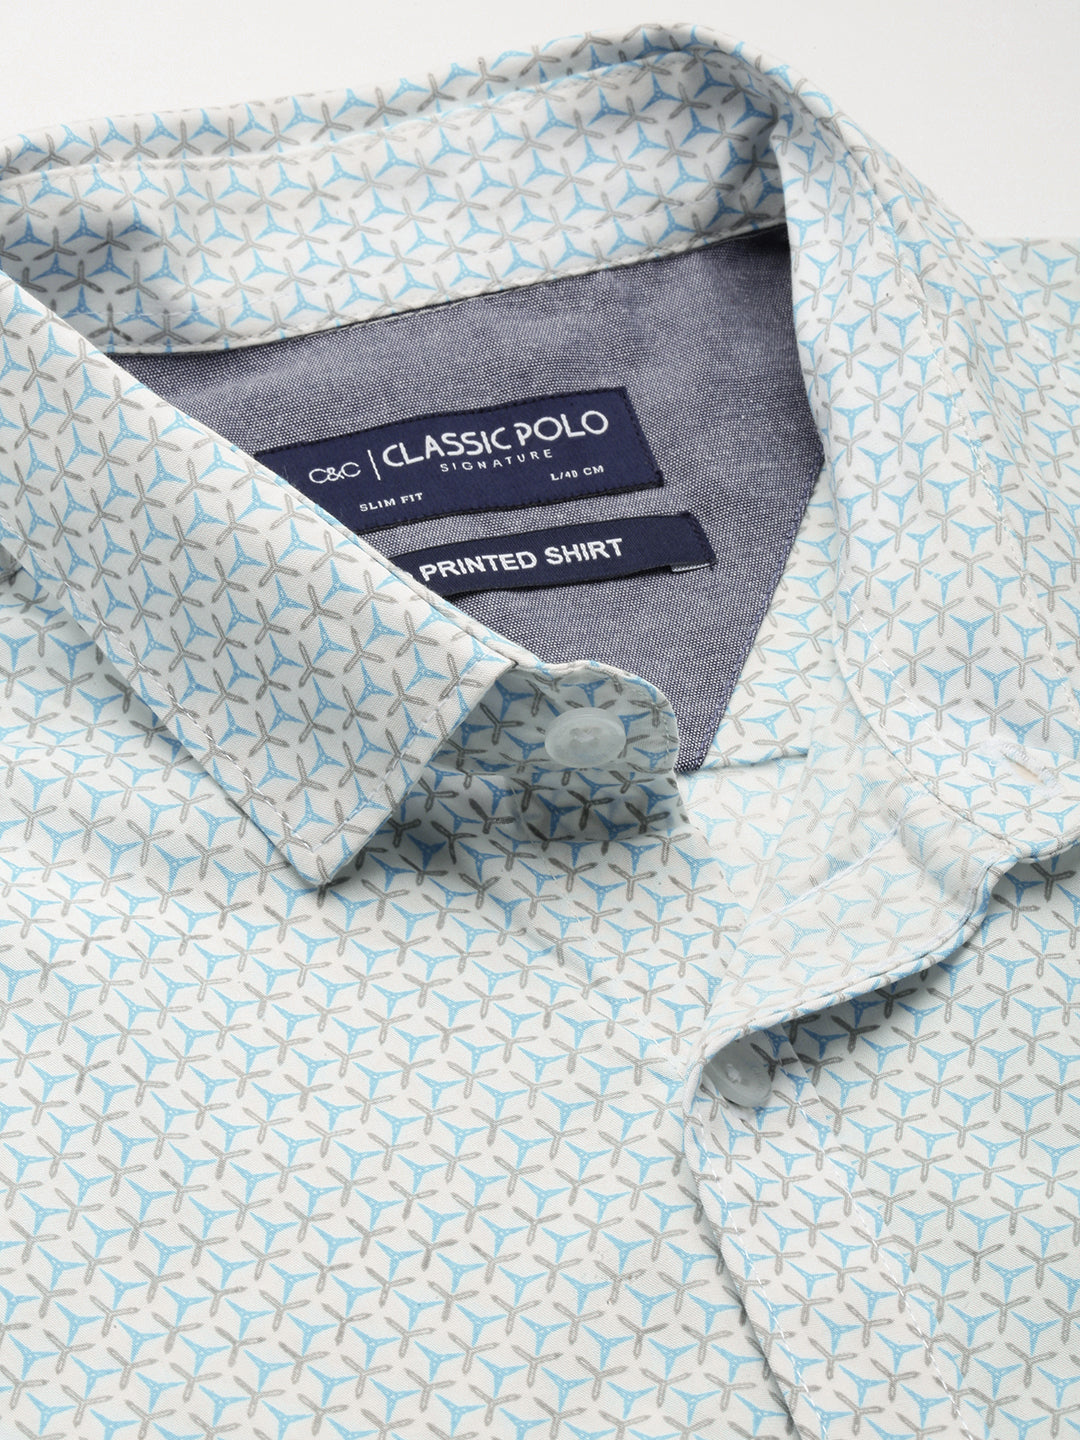 Classic Polo Men's Cotton Half Sleeve Printed Slim Fit Collar Neck Light Blue Color Woven Shirt | So1-147 B